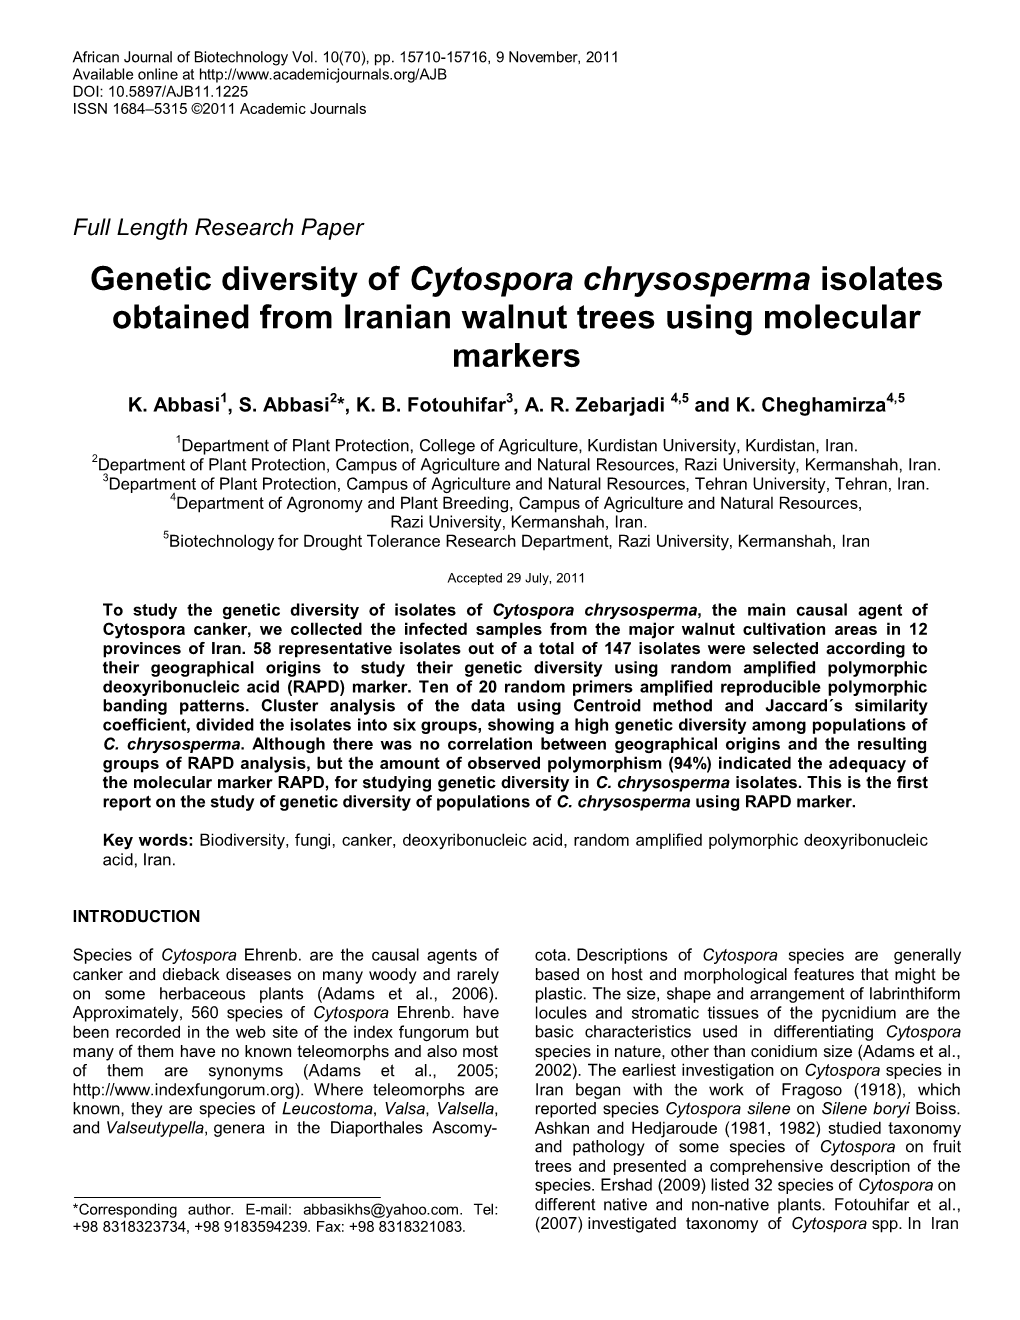 Genetic Diversity of Cytospora Chrysosperma Isolates Obtained from Iranian Walnut Trees Using Molecular Markers